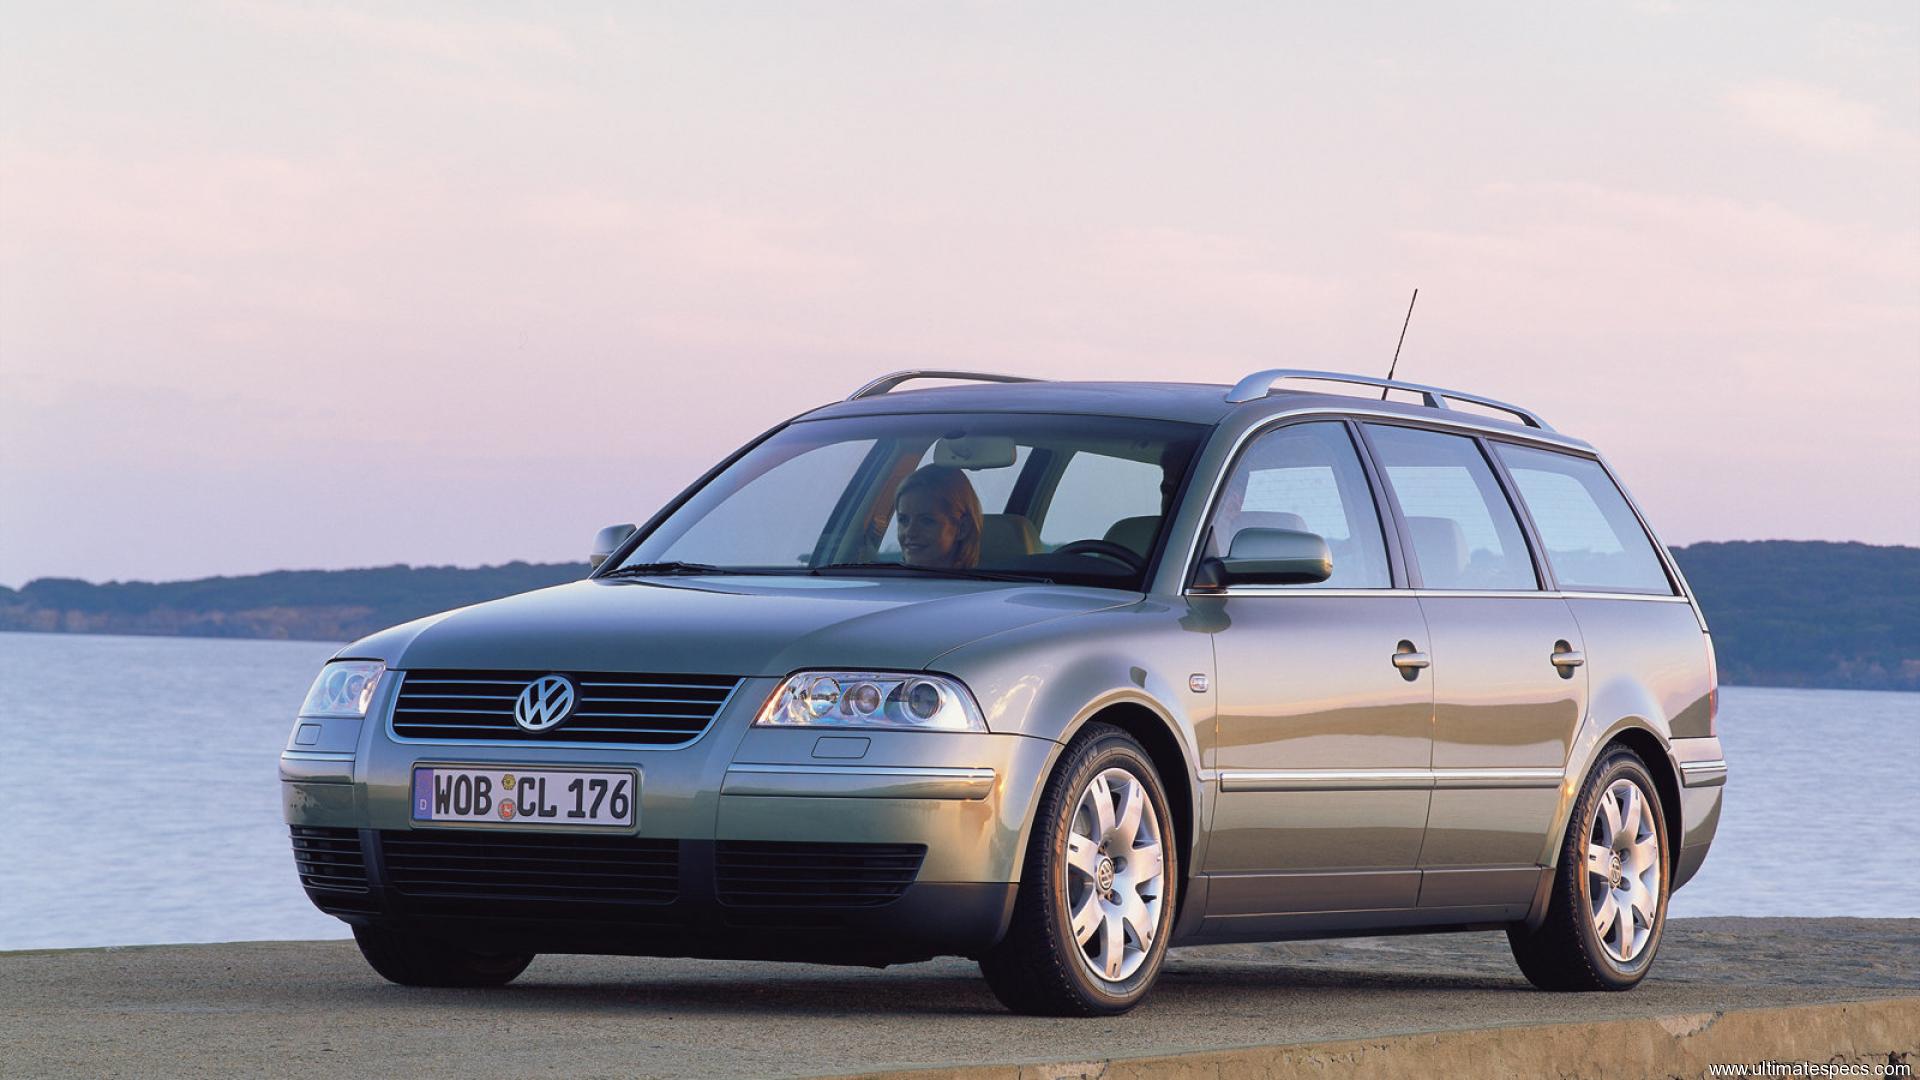 Пассат б5 универсал 1.9 дизель. Volkswagen Passat универсал 2000. Volkswagen Passat b5 универсал. Volkswagen Passat b5 variant. Фольксваген Пассат b5 универсал.